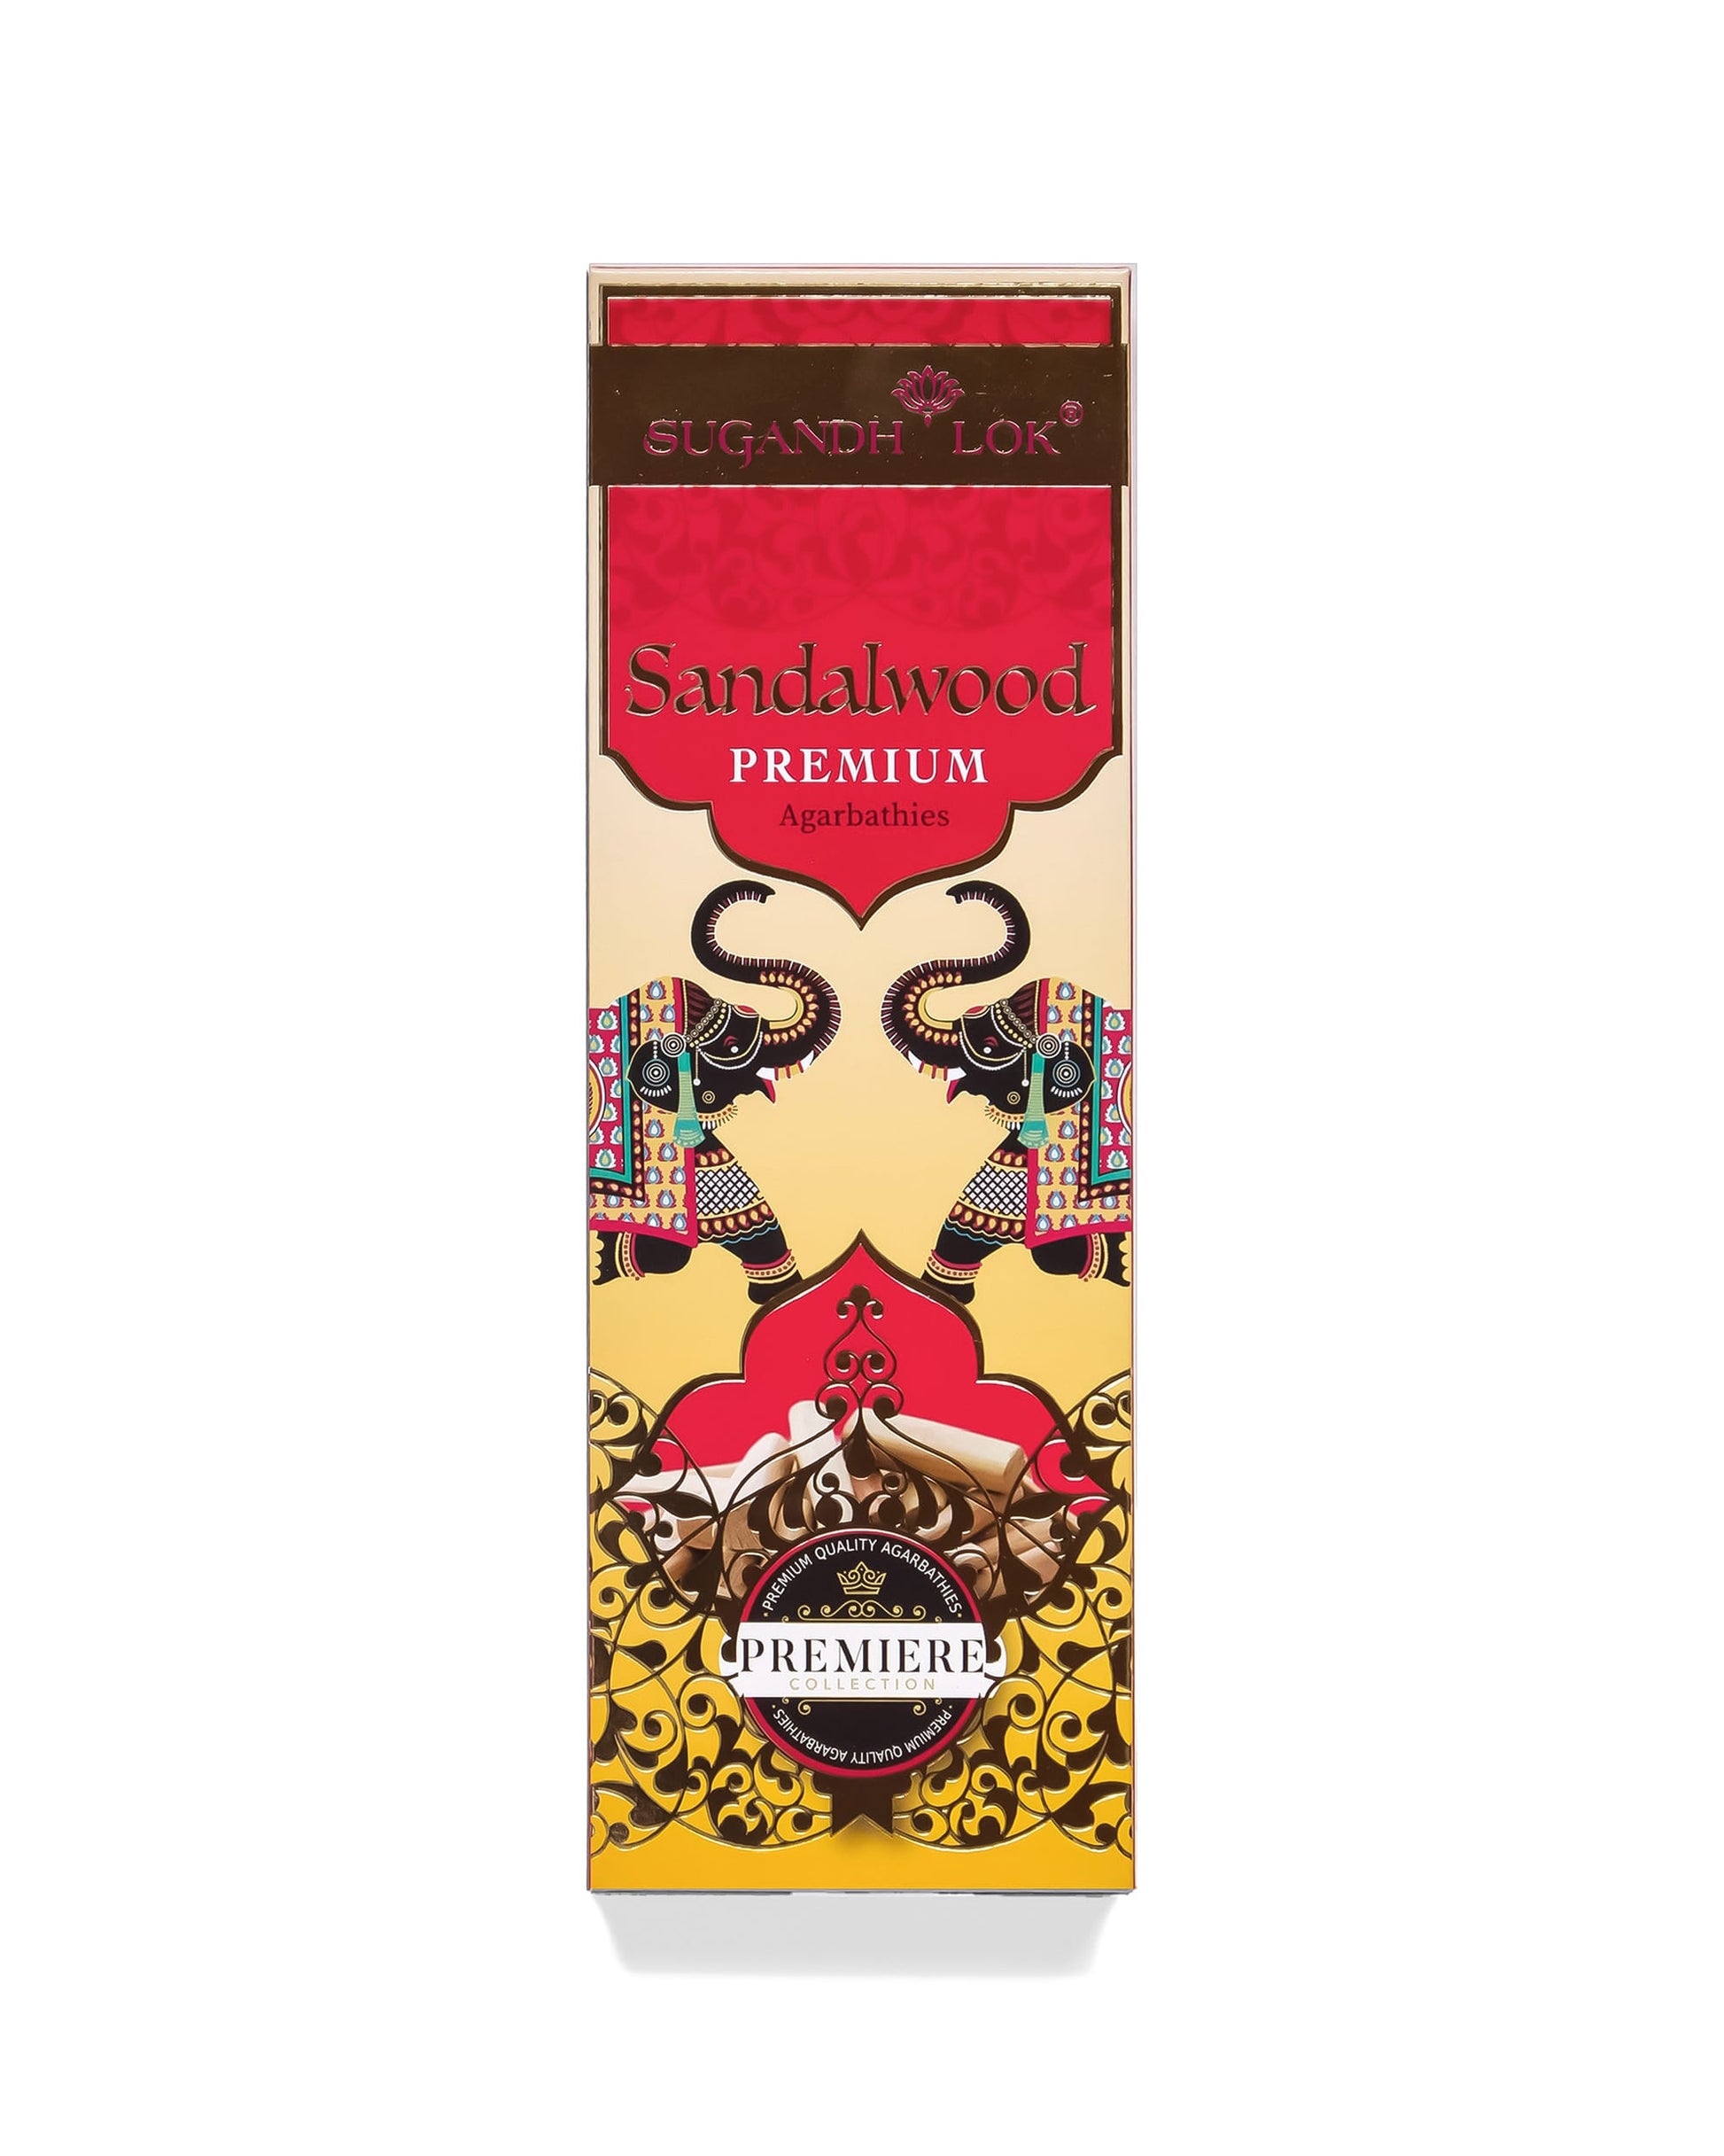 Sandalwood Premium Agarbatti Pack by SugandhLok